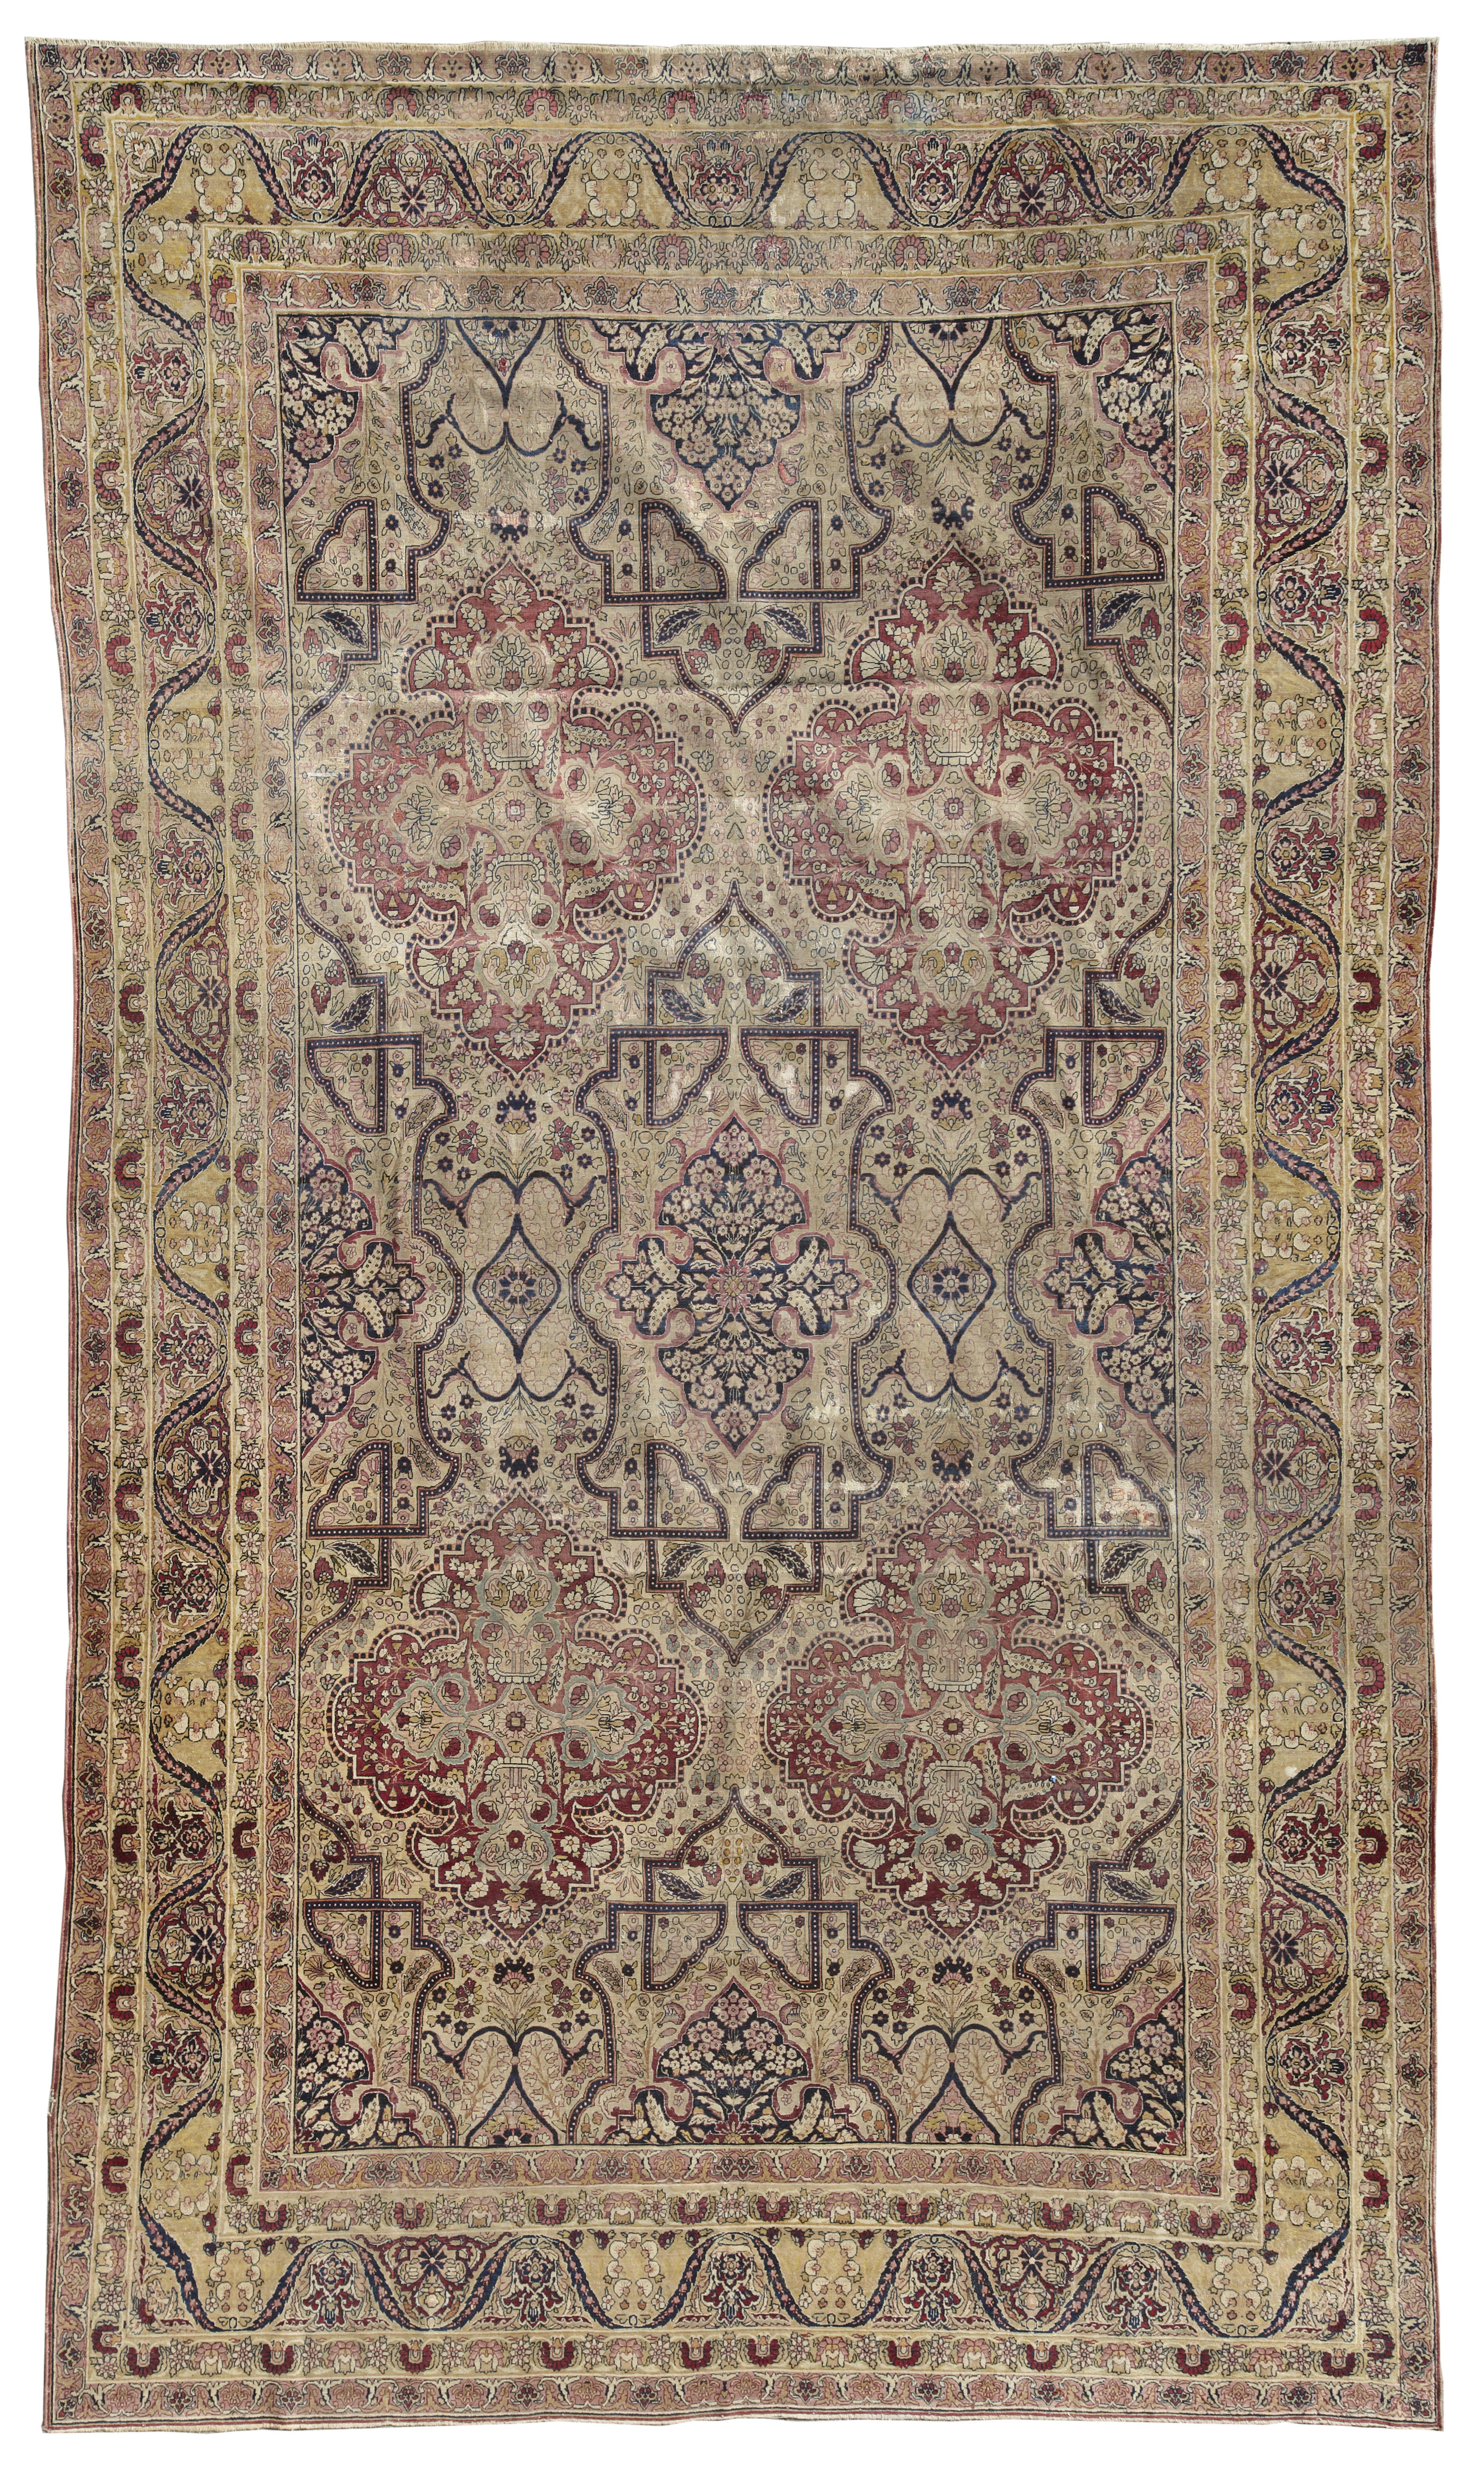 A Lavar Kerman carpet dimensions